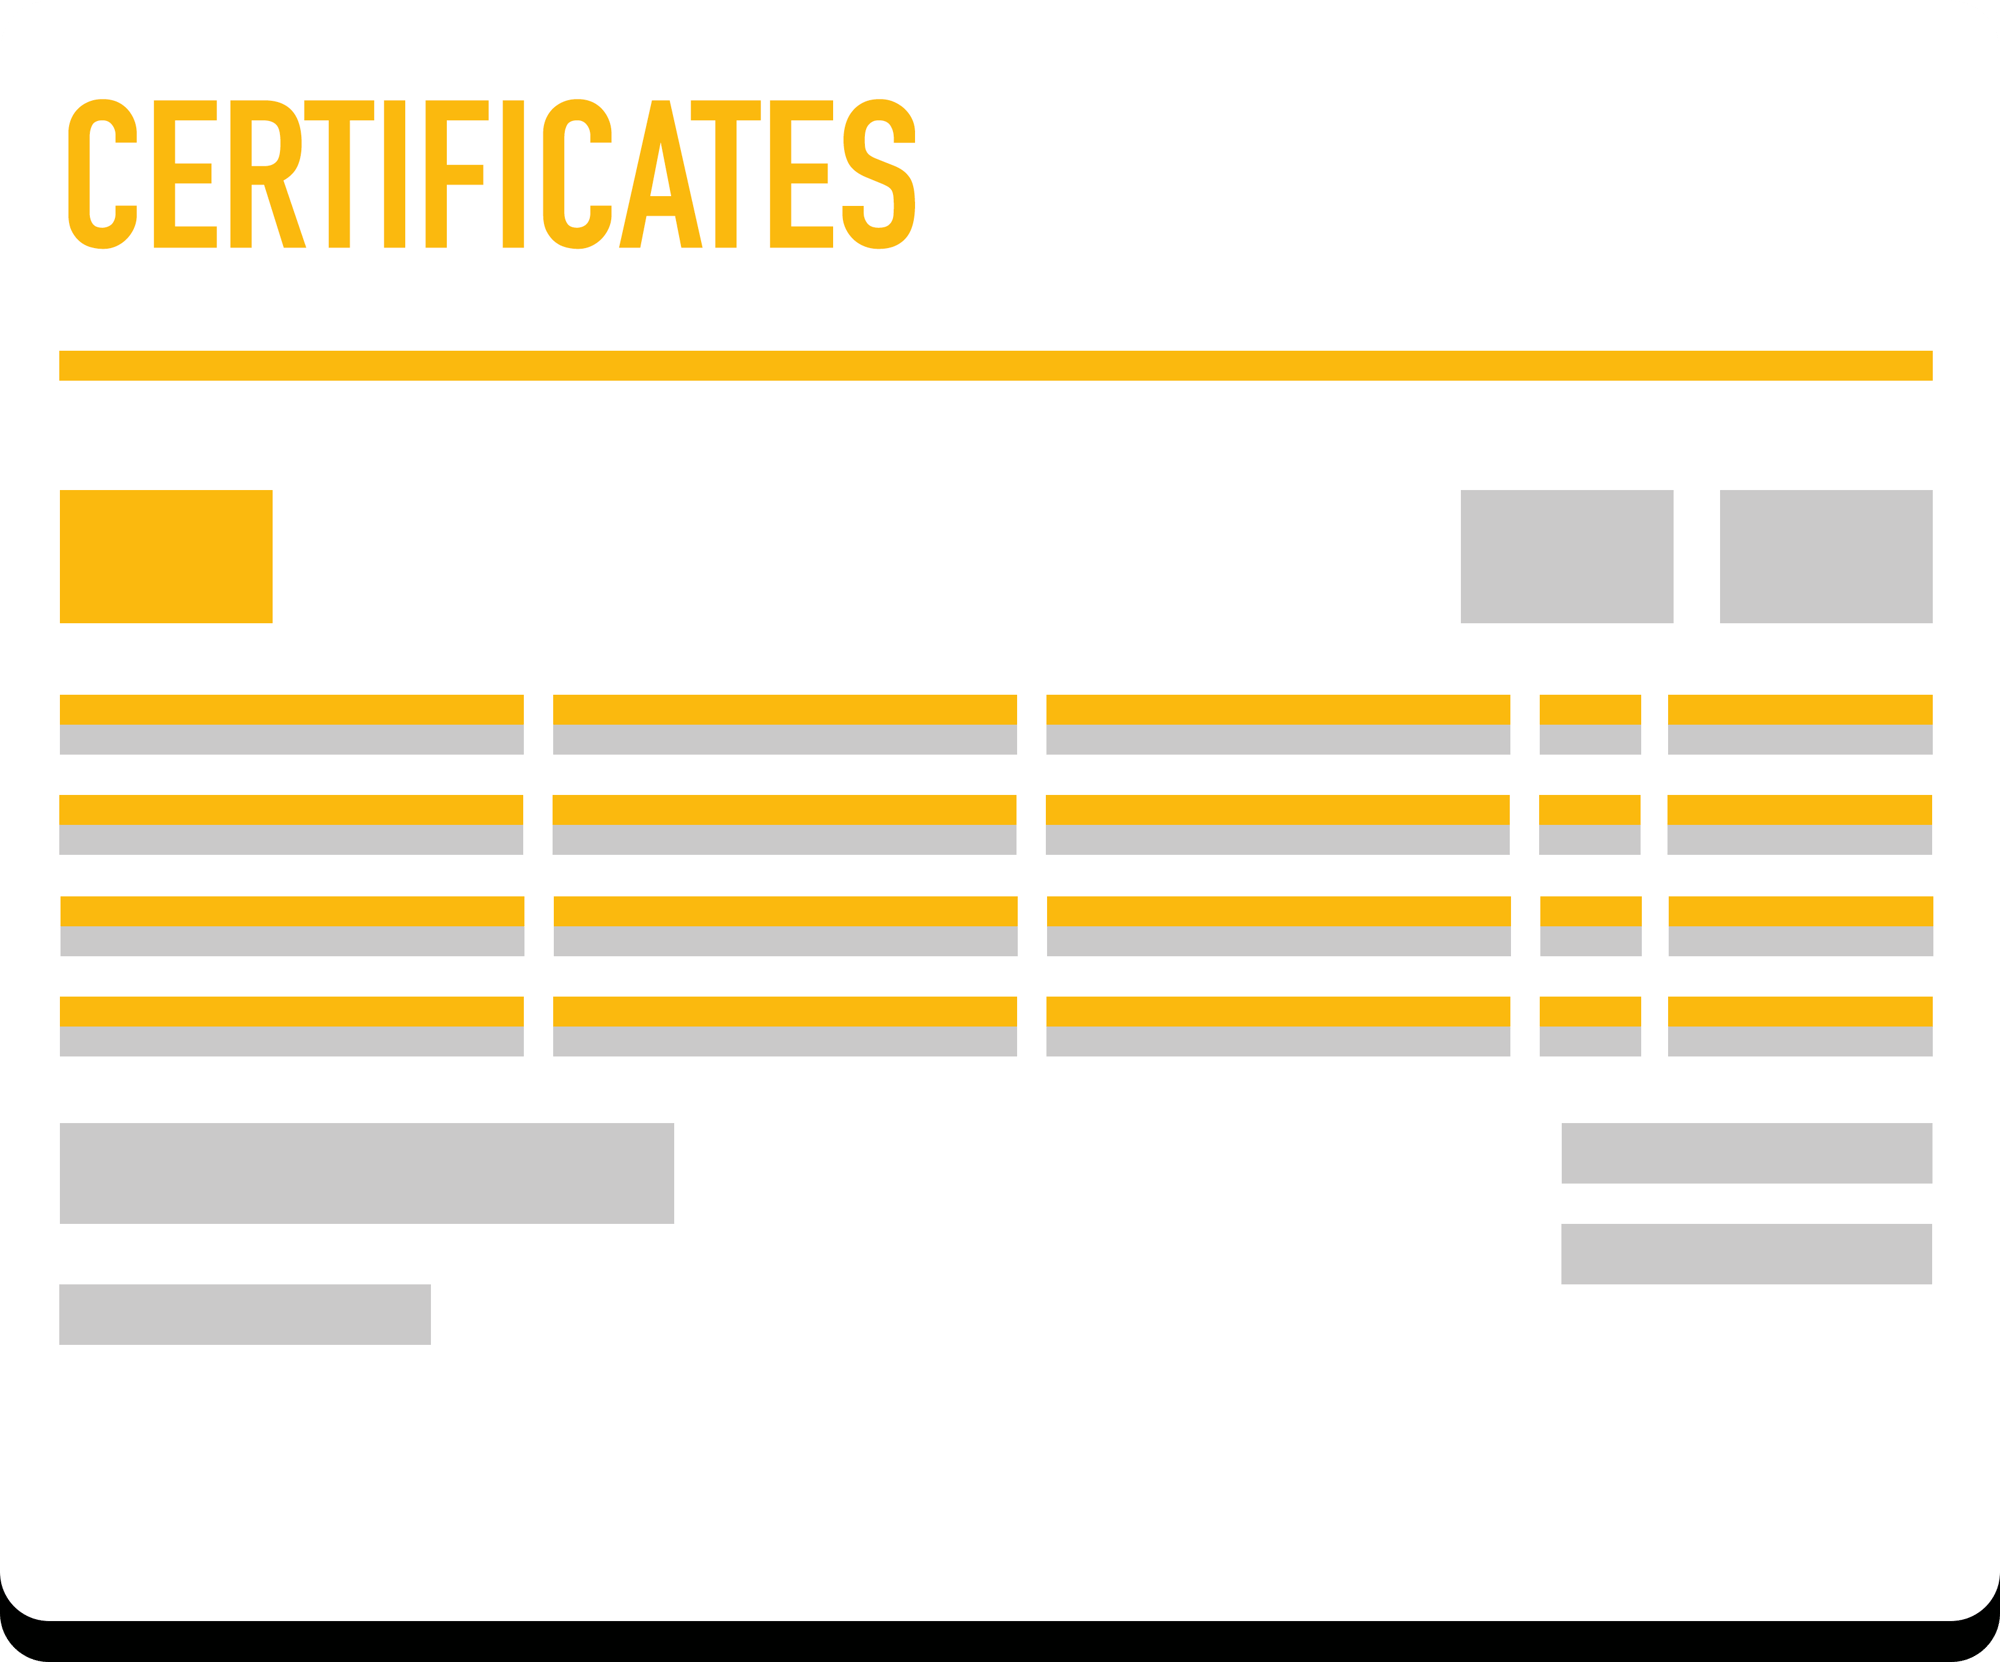 Certificates for window glazing company